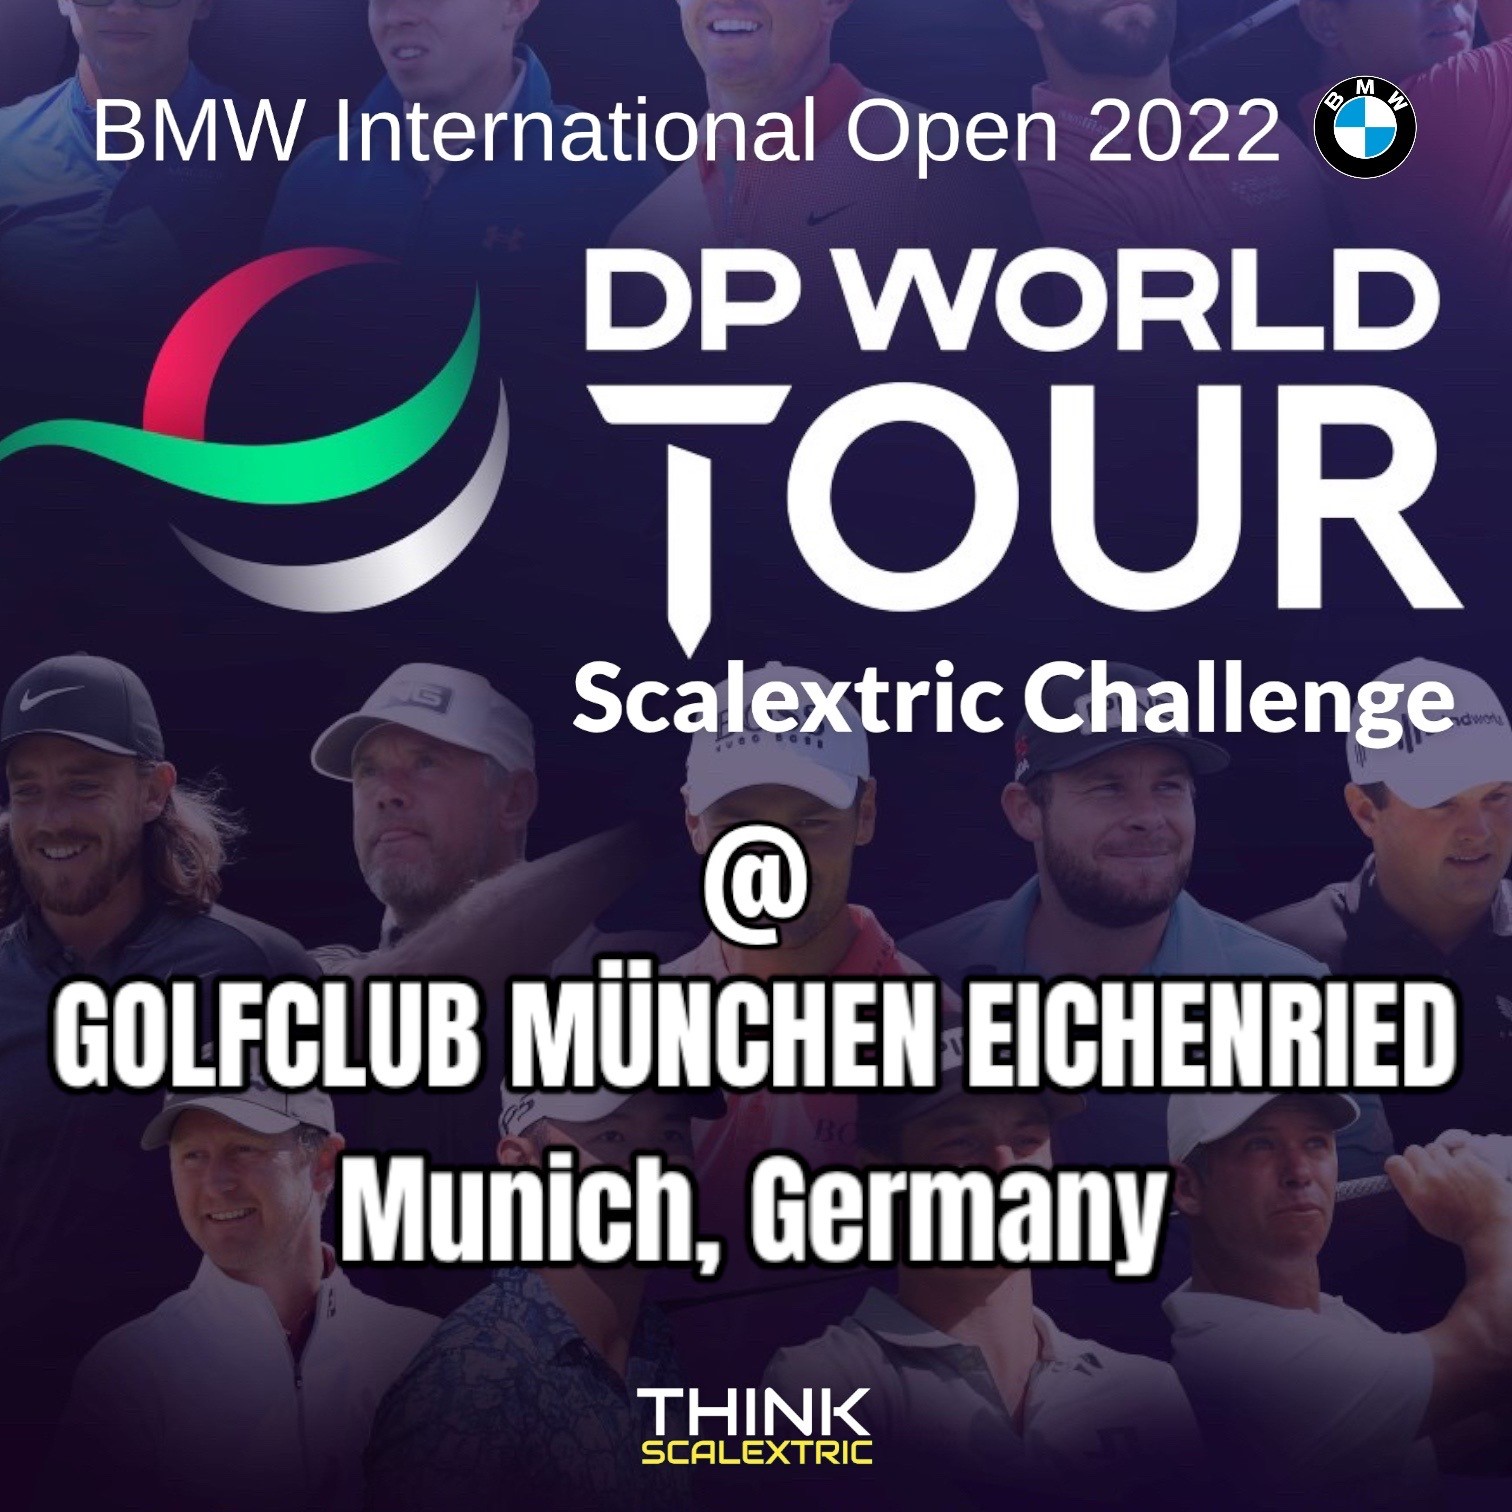 DP World Tour BMW International Open 2022 scalextric hire